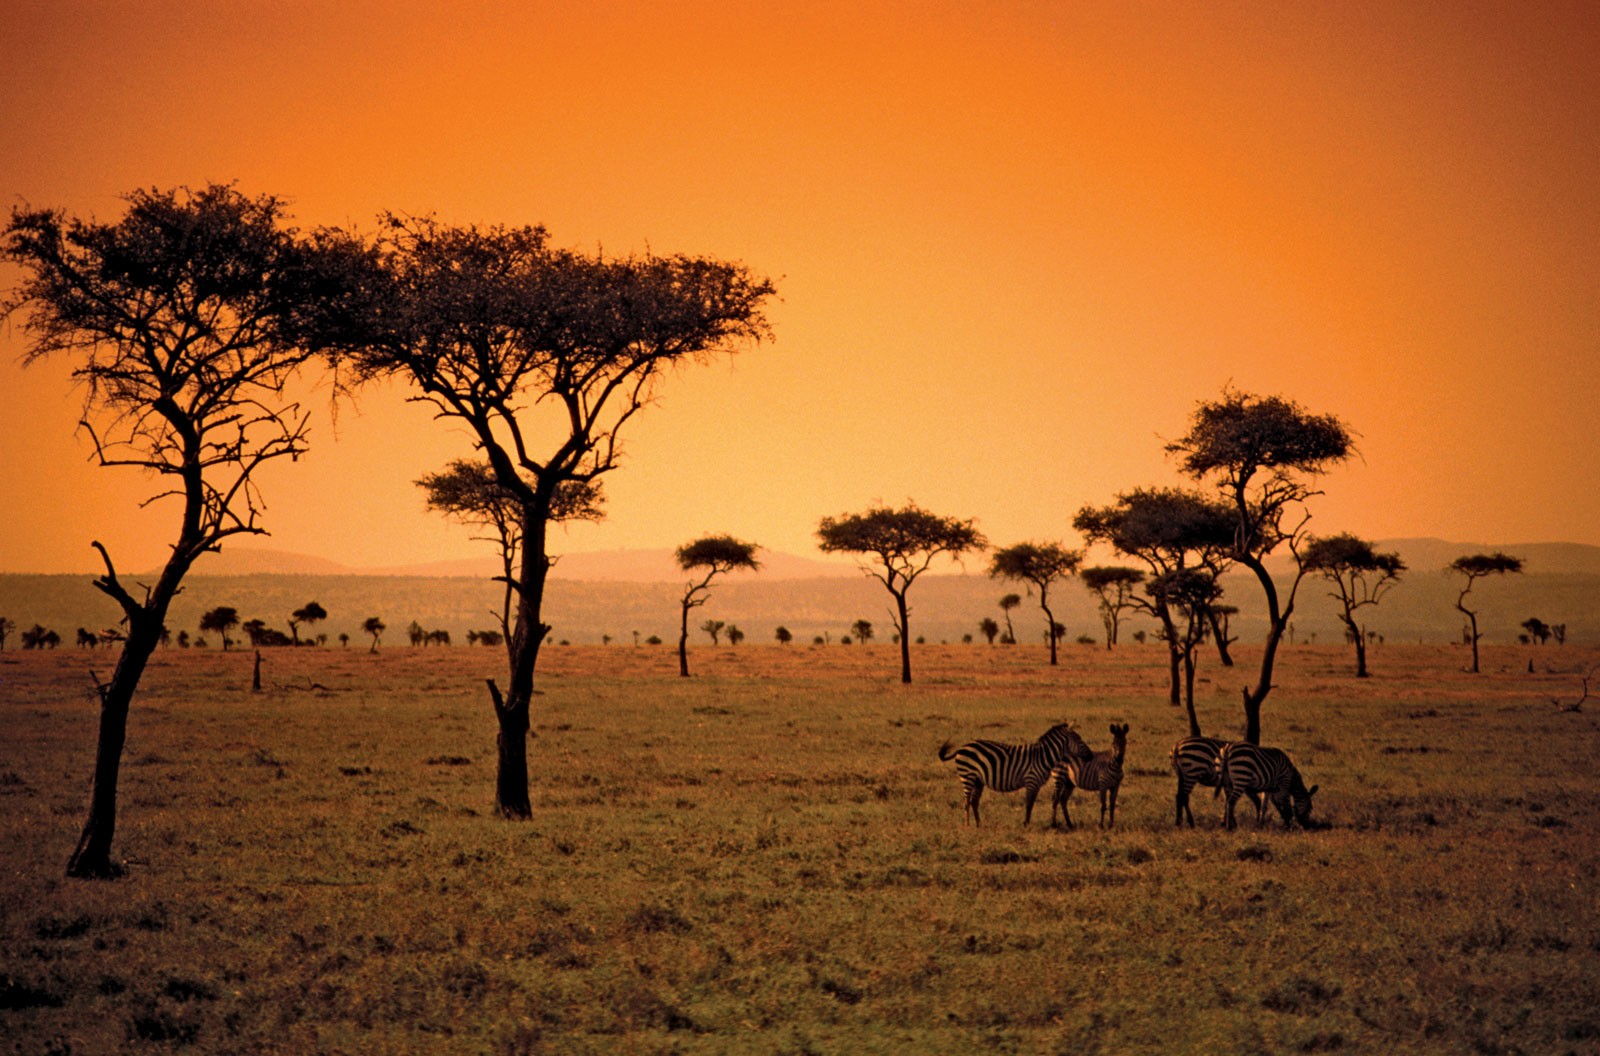 General 1600x1056 Africa nature landscape trees animals mammals orange sky zebras